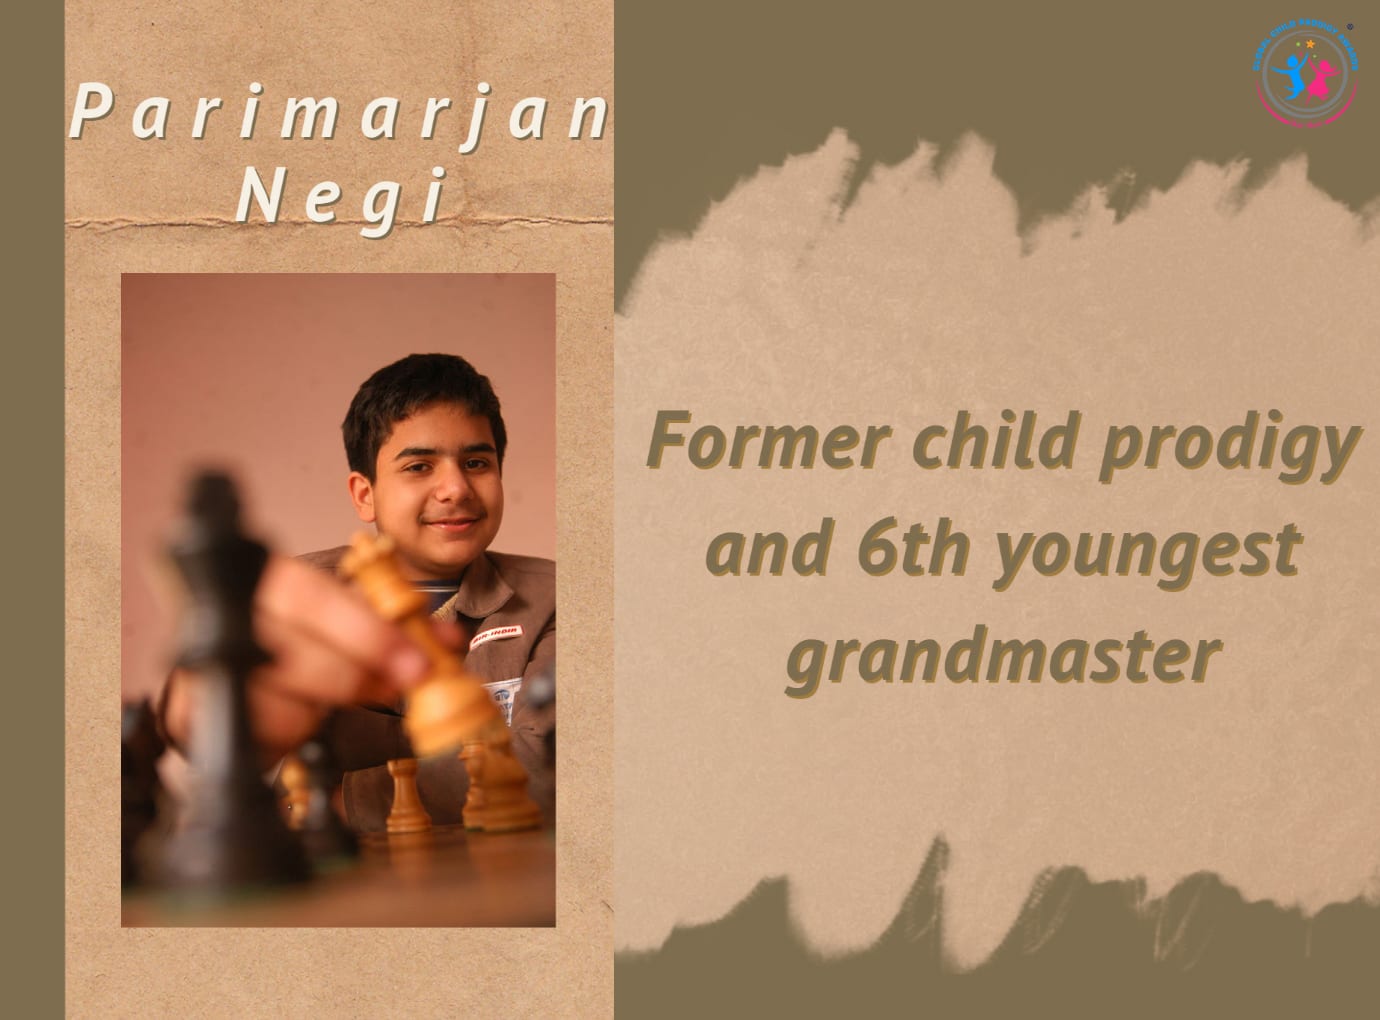 The Three-Time Winner Of World Chess Championship - R Praggnanandhaa - GCP  Awards Blog